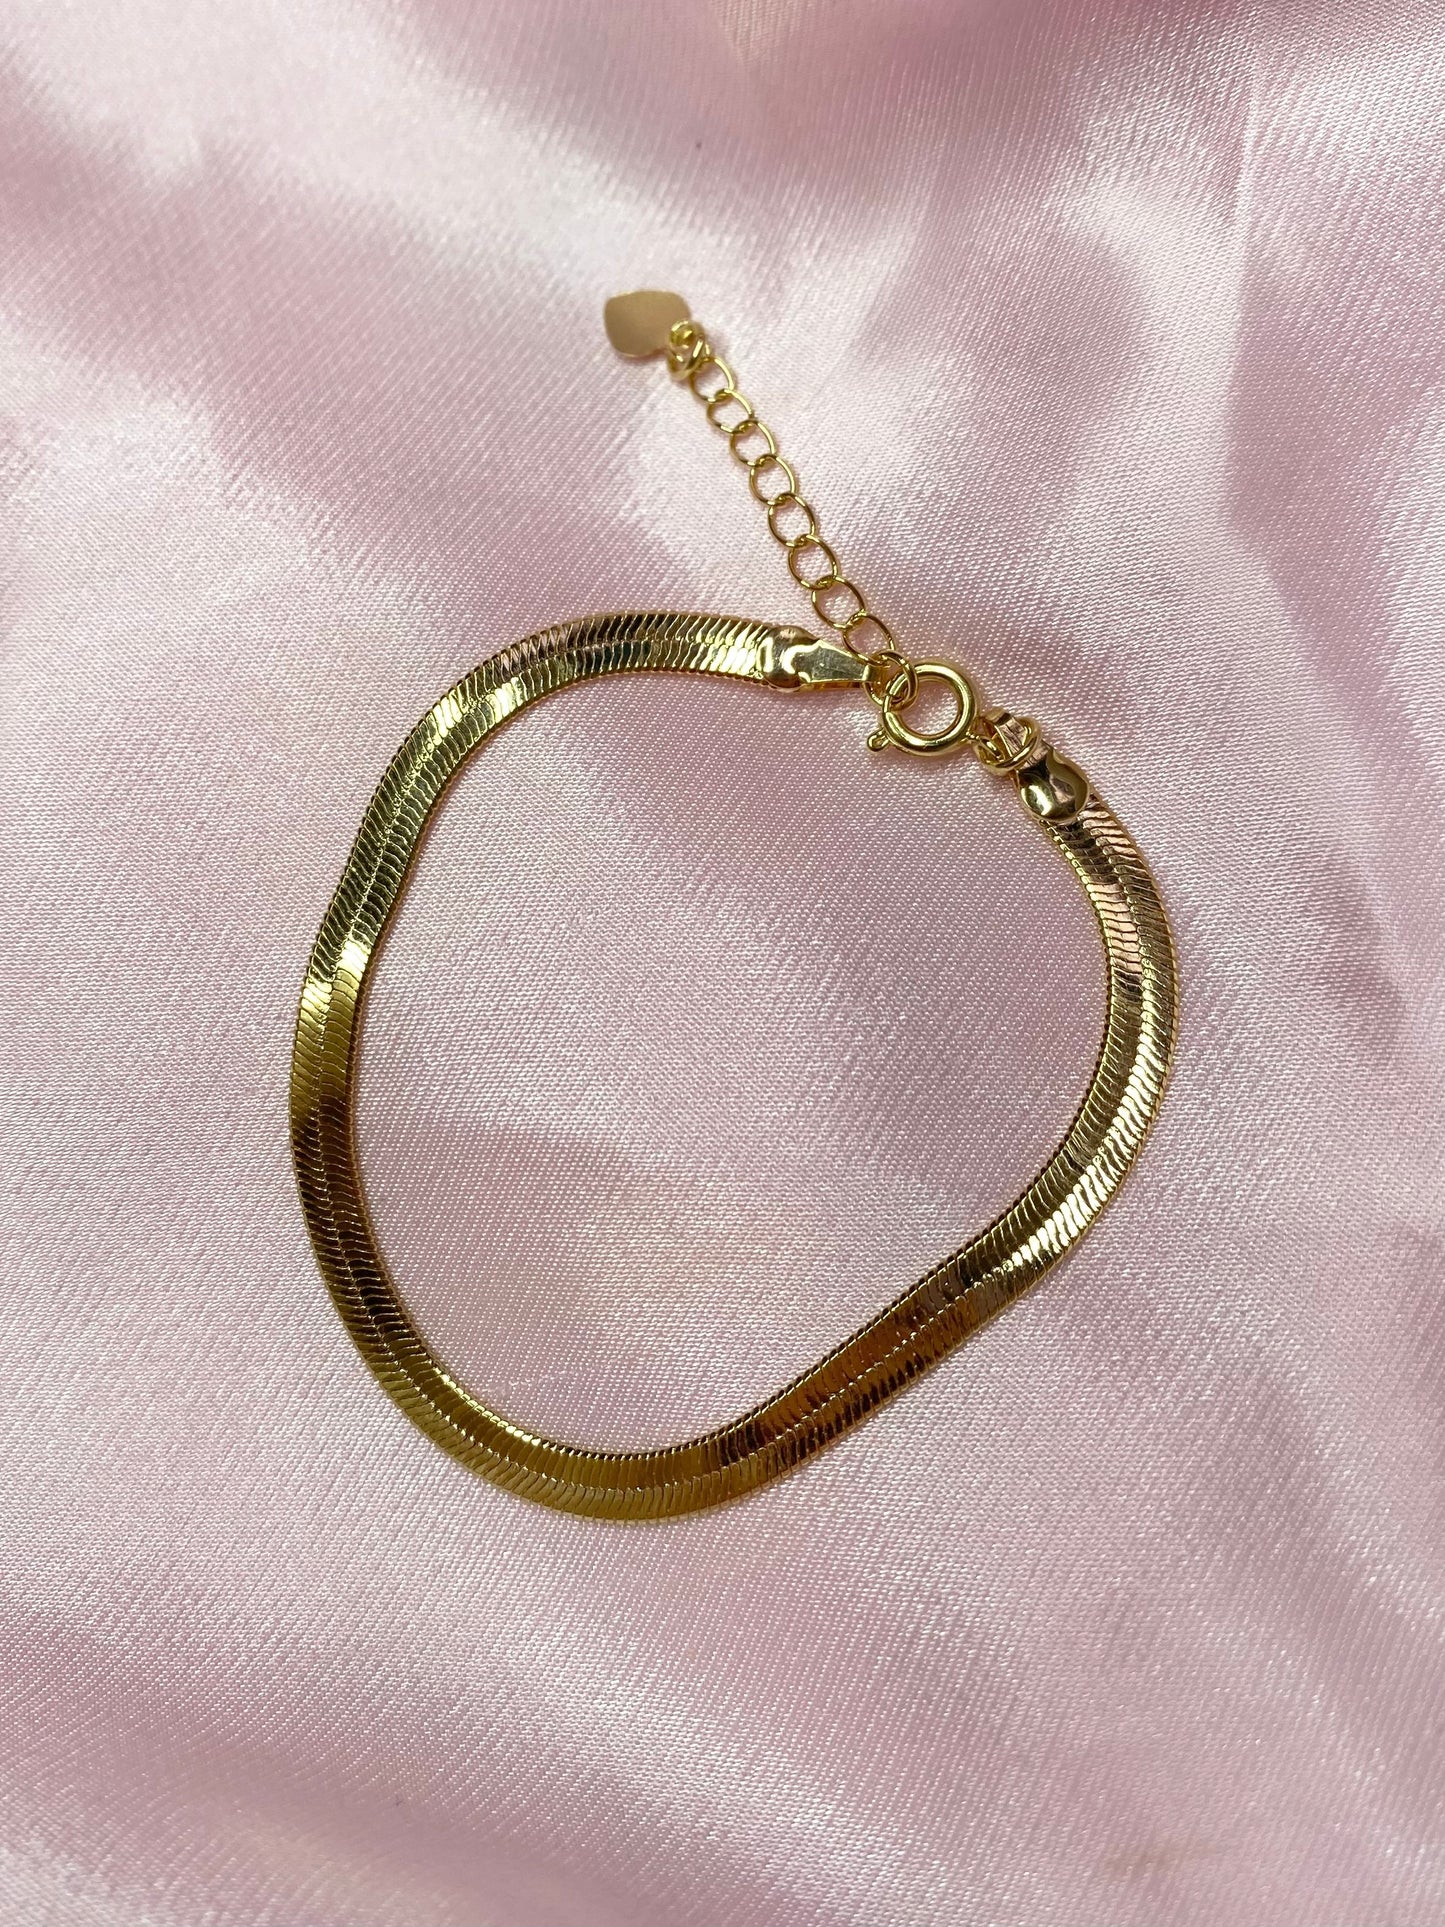 Herringbone Bracelet (18k gold) - Luna Alaska Jewelry